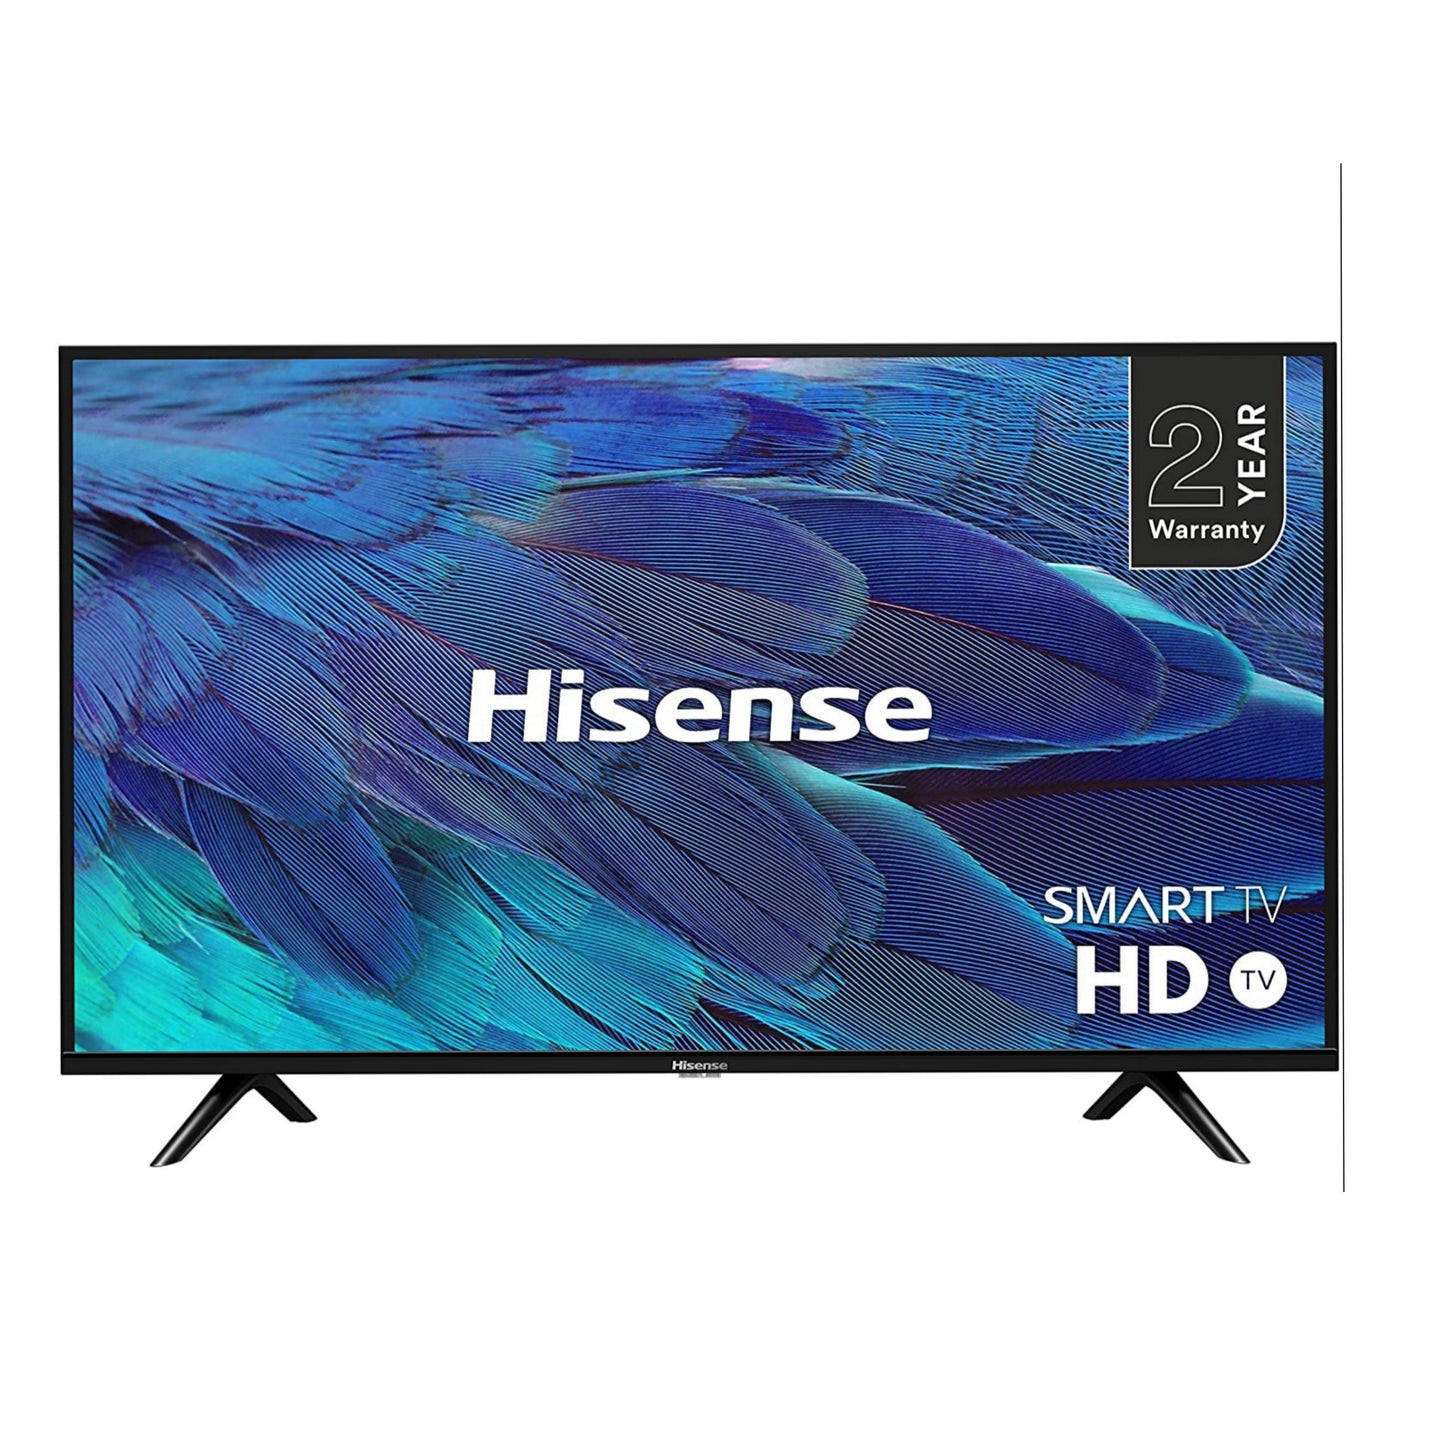 Hisense 40 Inch Smart Full HD 1080p Widescreen LED TV - Brand New